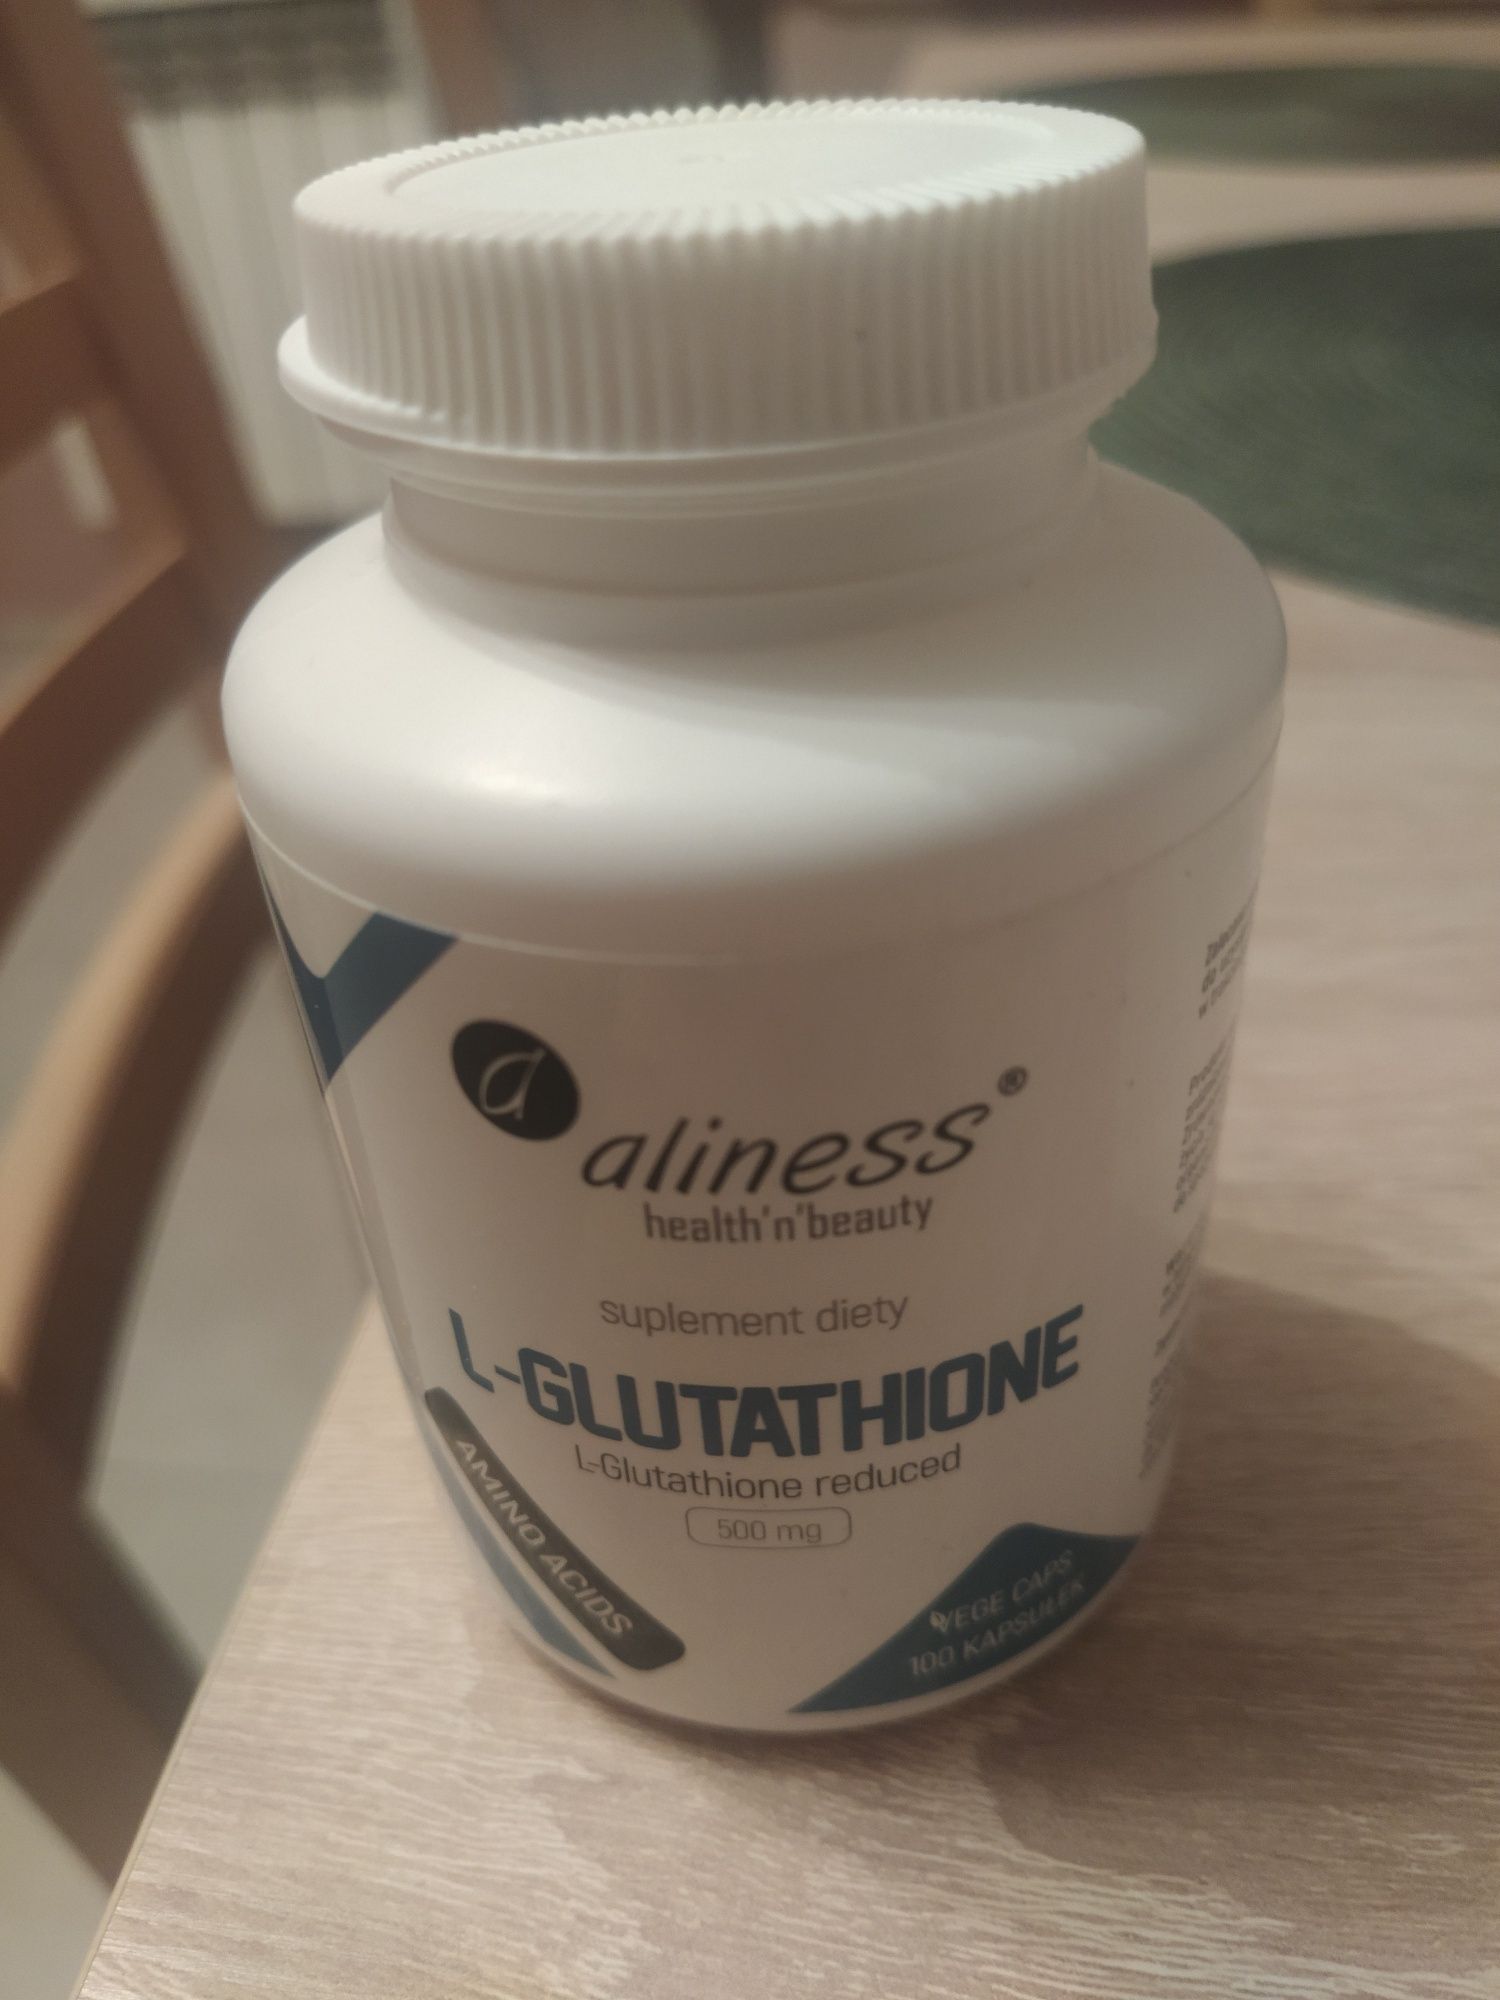 L-glutathione Aliness